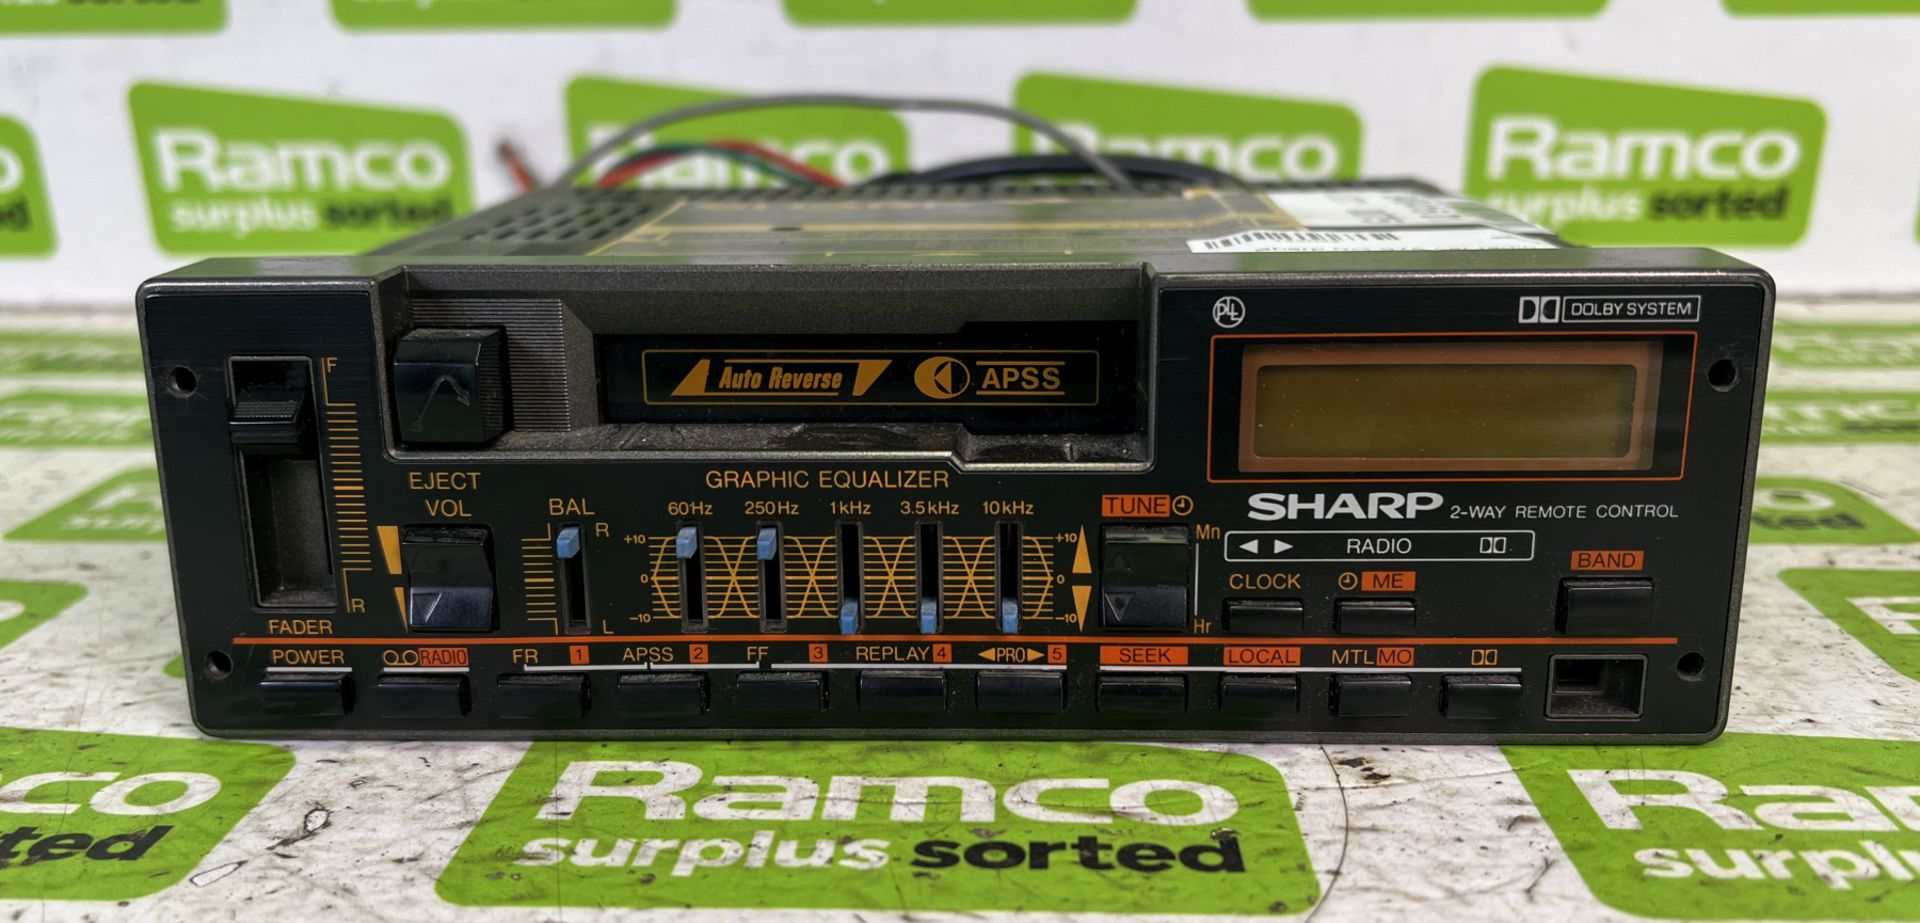 Sharp RG-975 car radio cassette player - Image 2 of 4